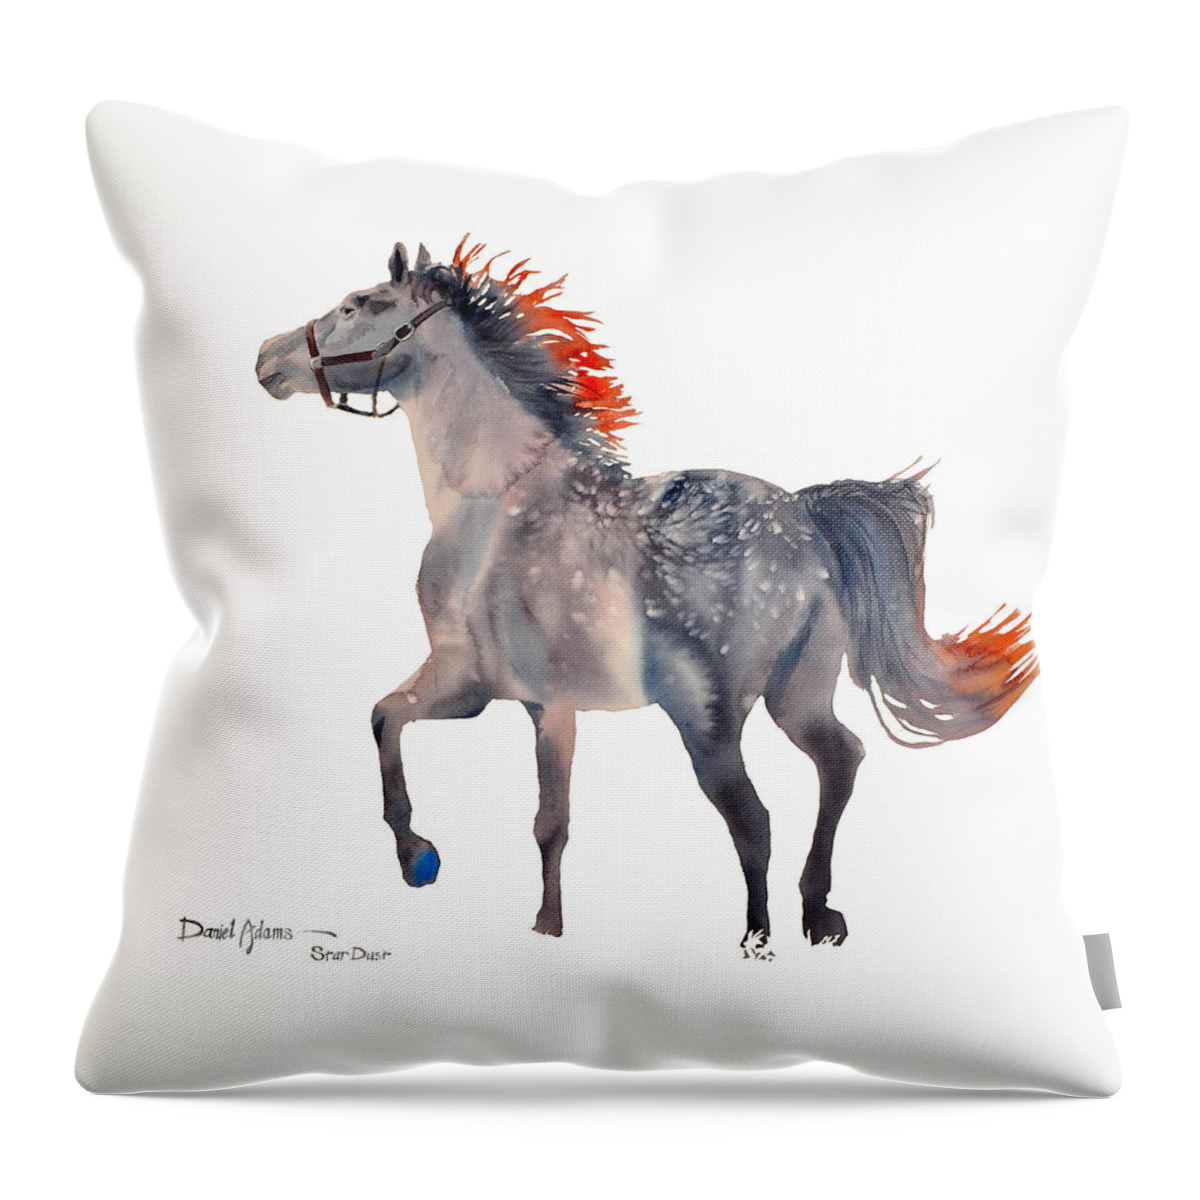 Horse Throw Pillow featuring the painting DA151 Star Dust by Daniel Adams by Daniel Adams